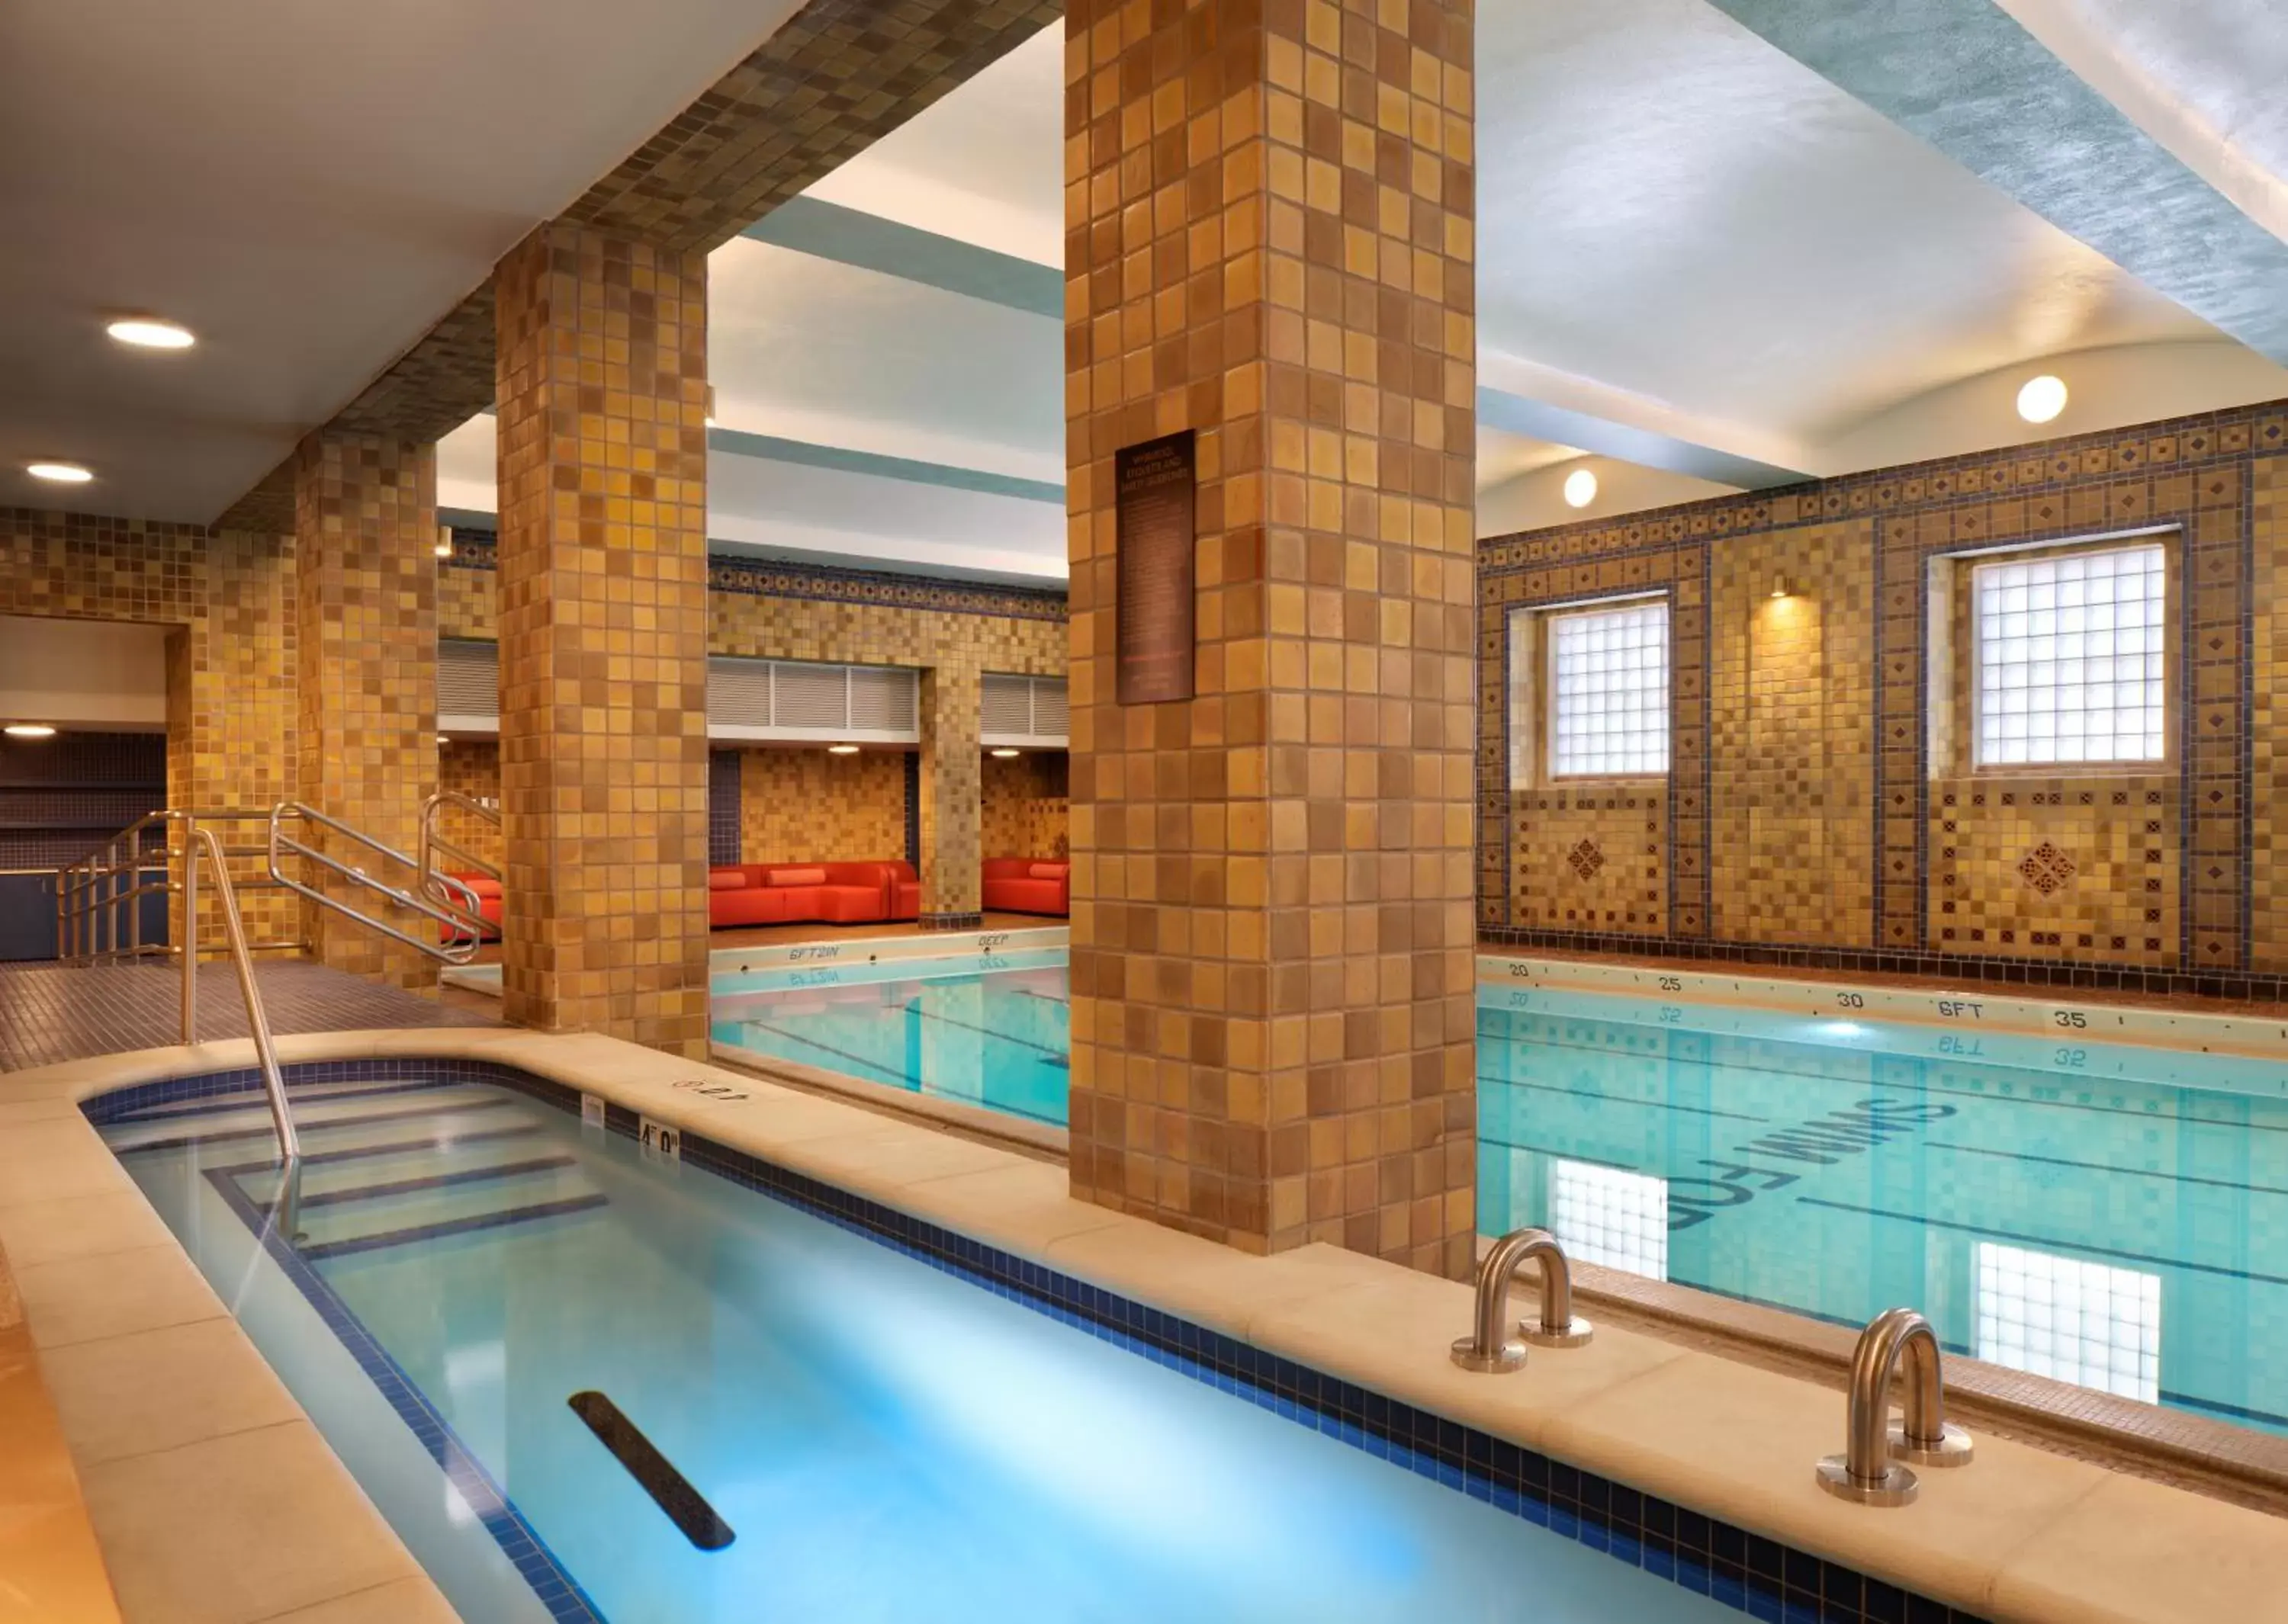 Hot Tub, Swimming Pool in 21c Museum Hotel St Louis